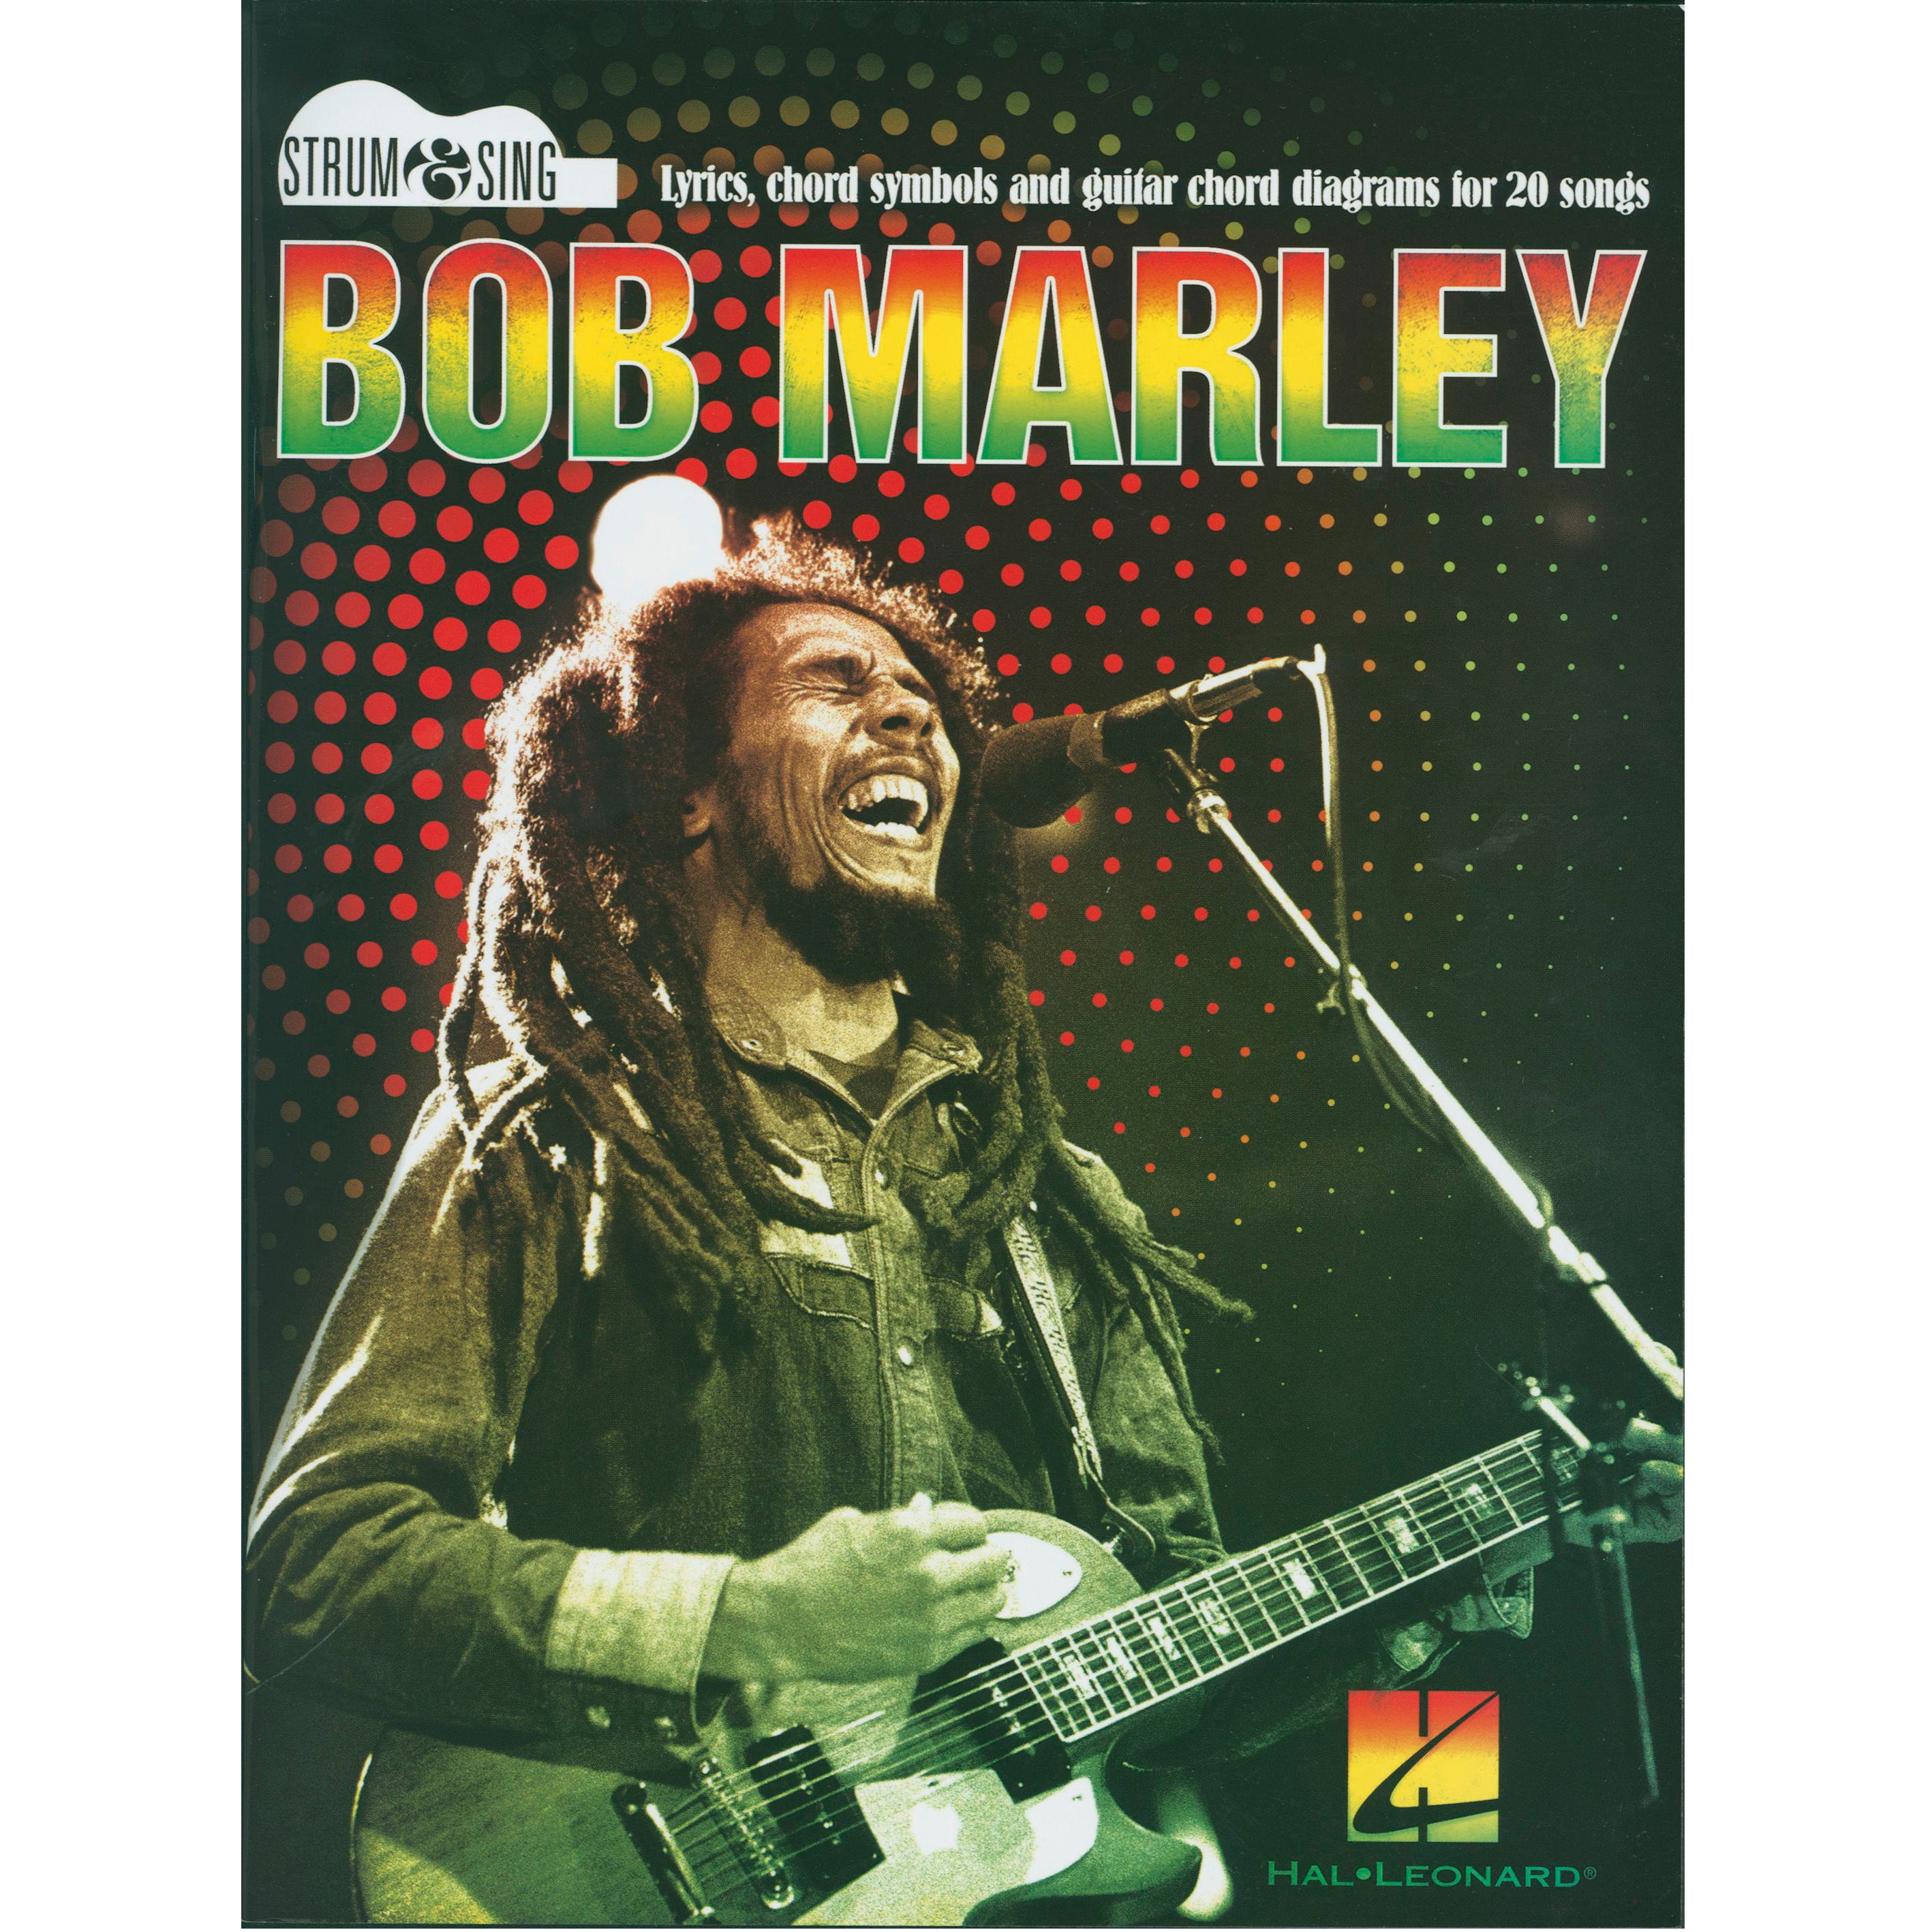 Hal Leonard, Bob Marley - Strum & Sing Guitar